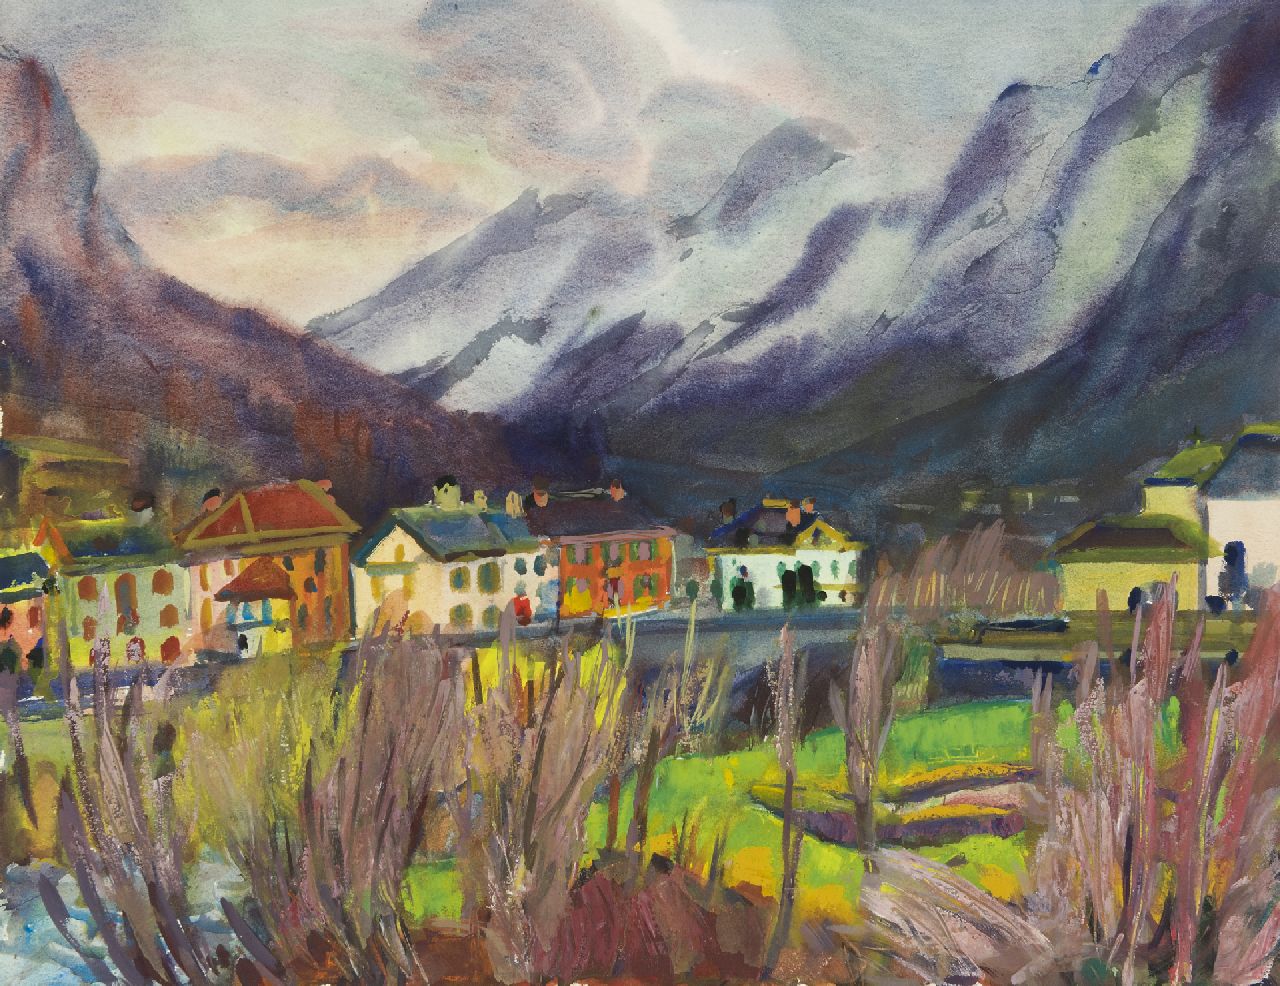 Vries J. de | Jannes de Vries, Bignasco in the Maggia valley, Italy, watercolour and gouache on paper 55.8 x 73.0 cm